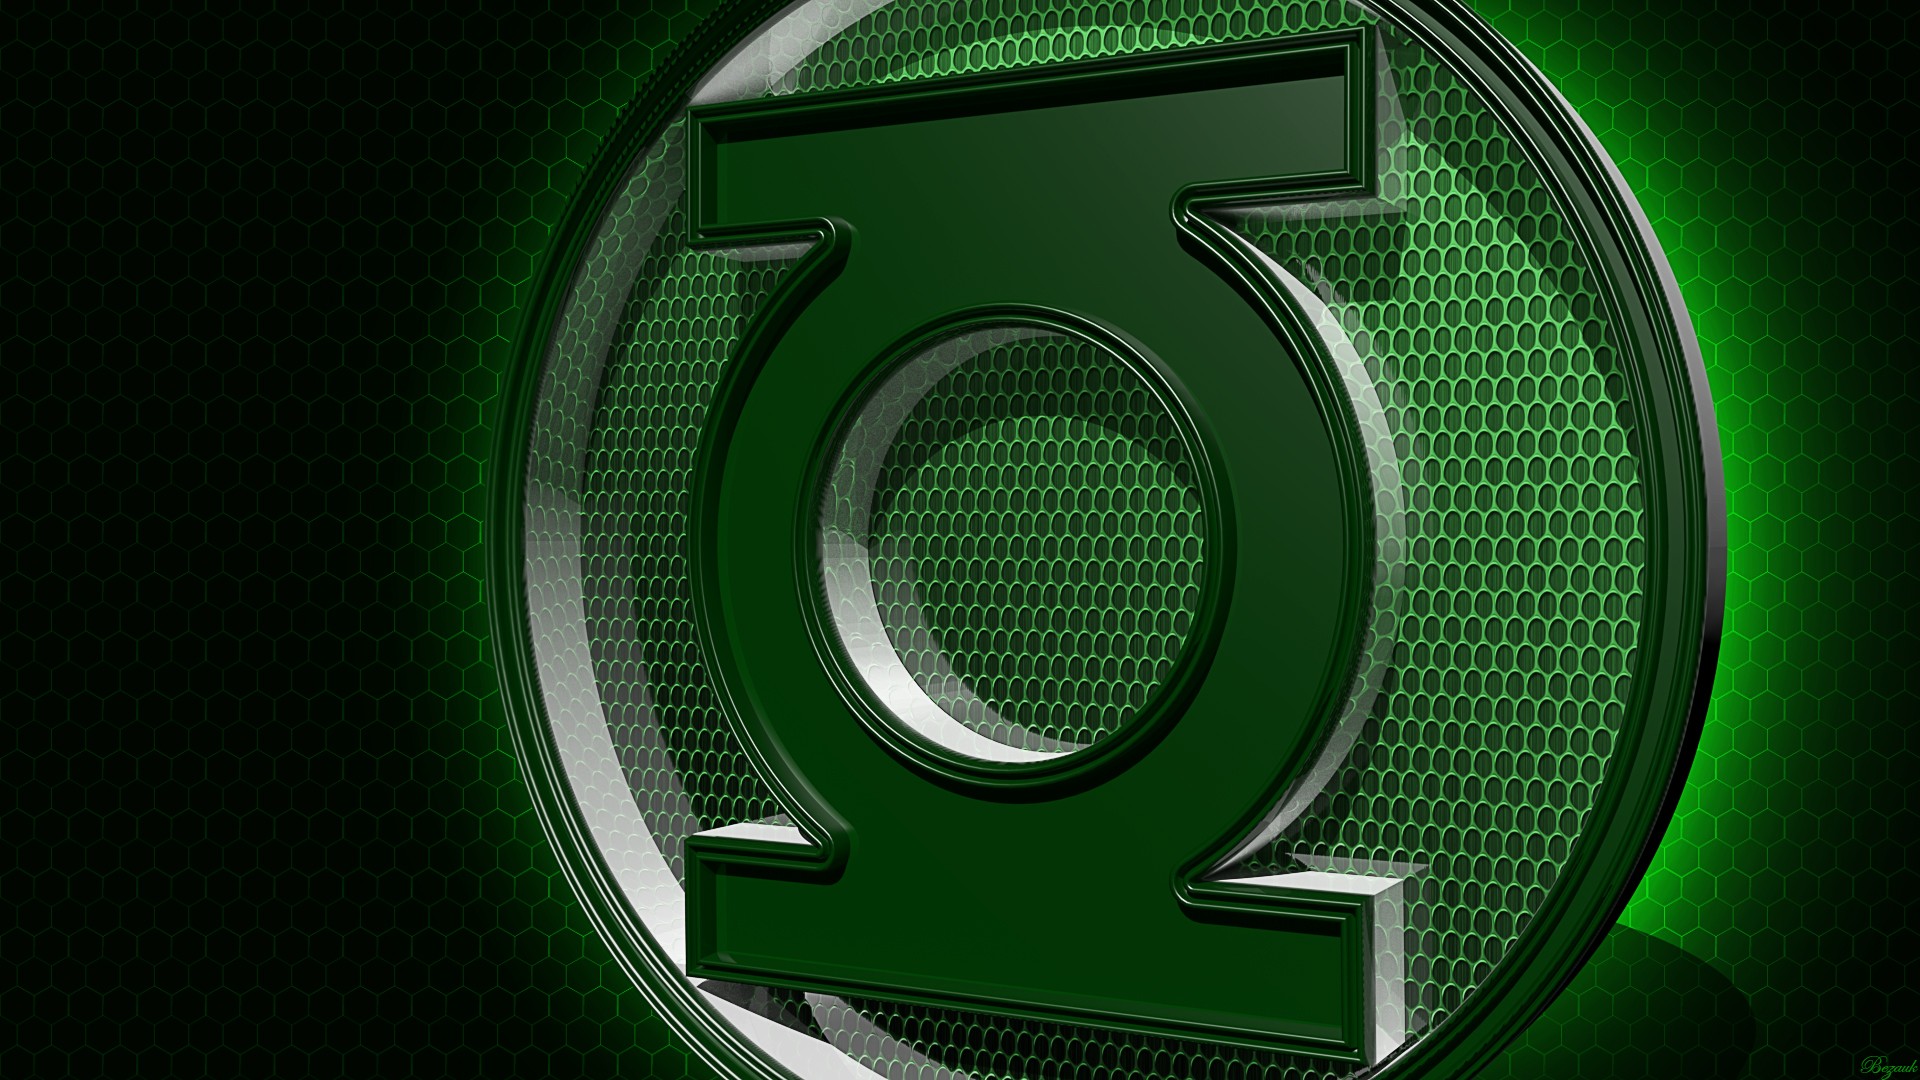 Green Lantern, DC Comics, logos - desktop wallpaper